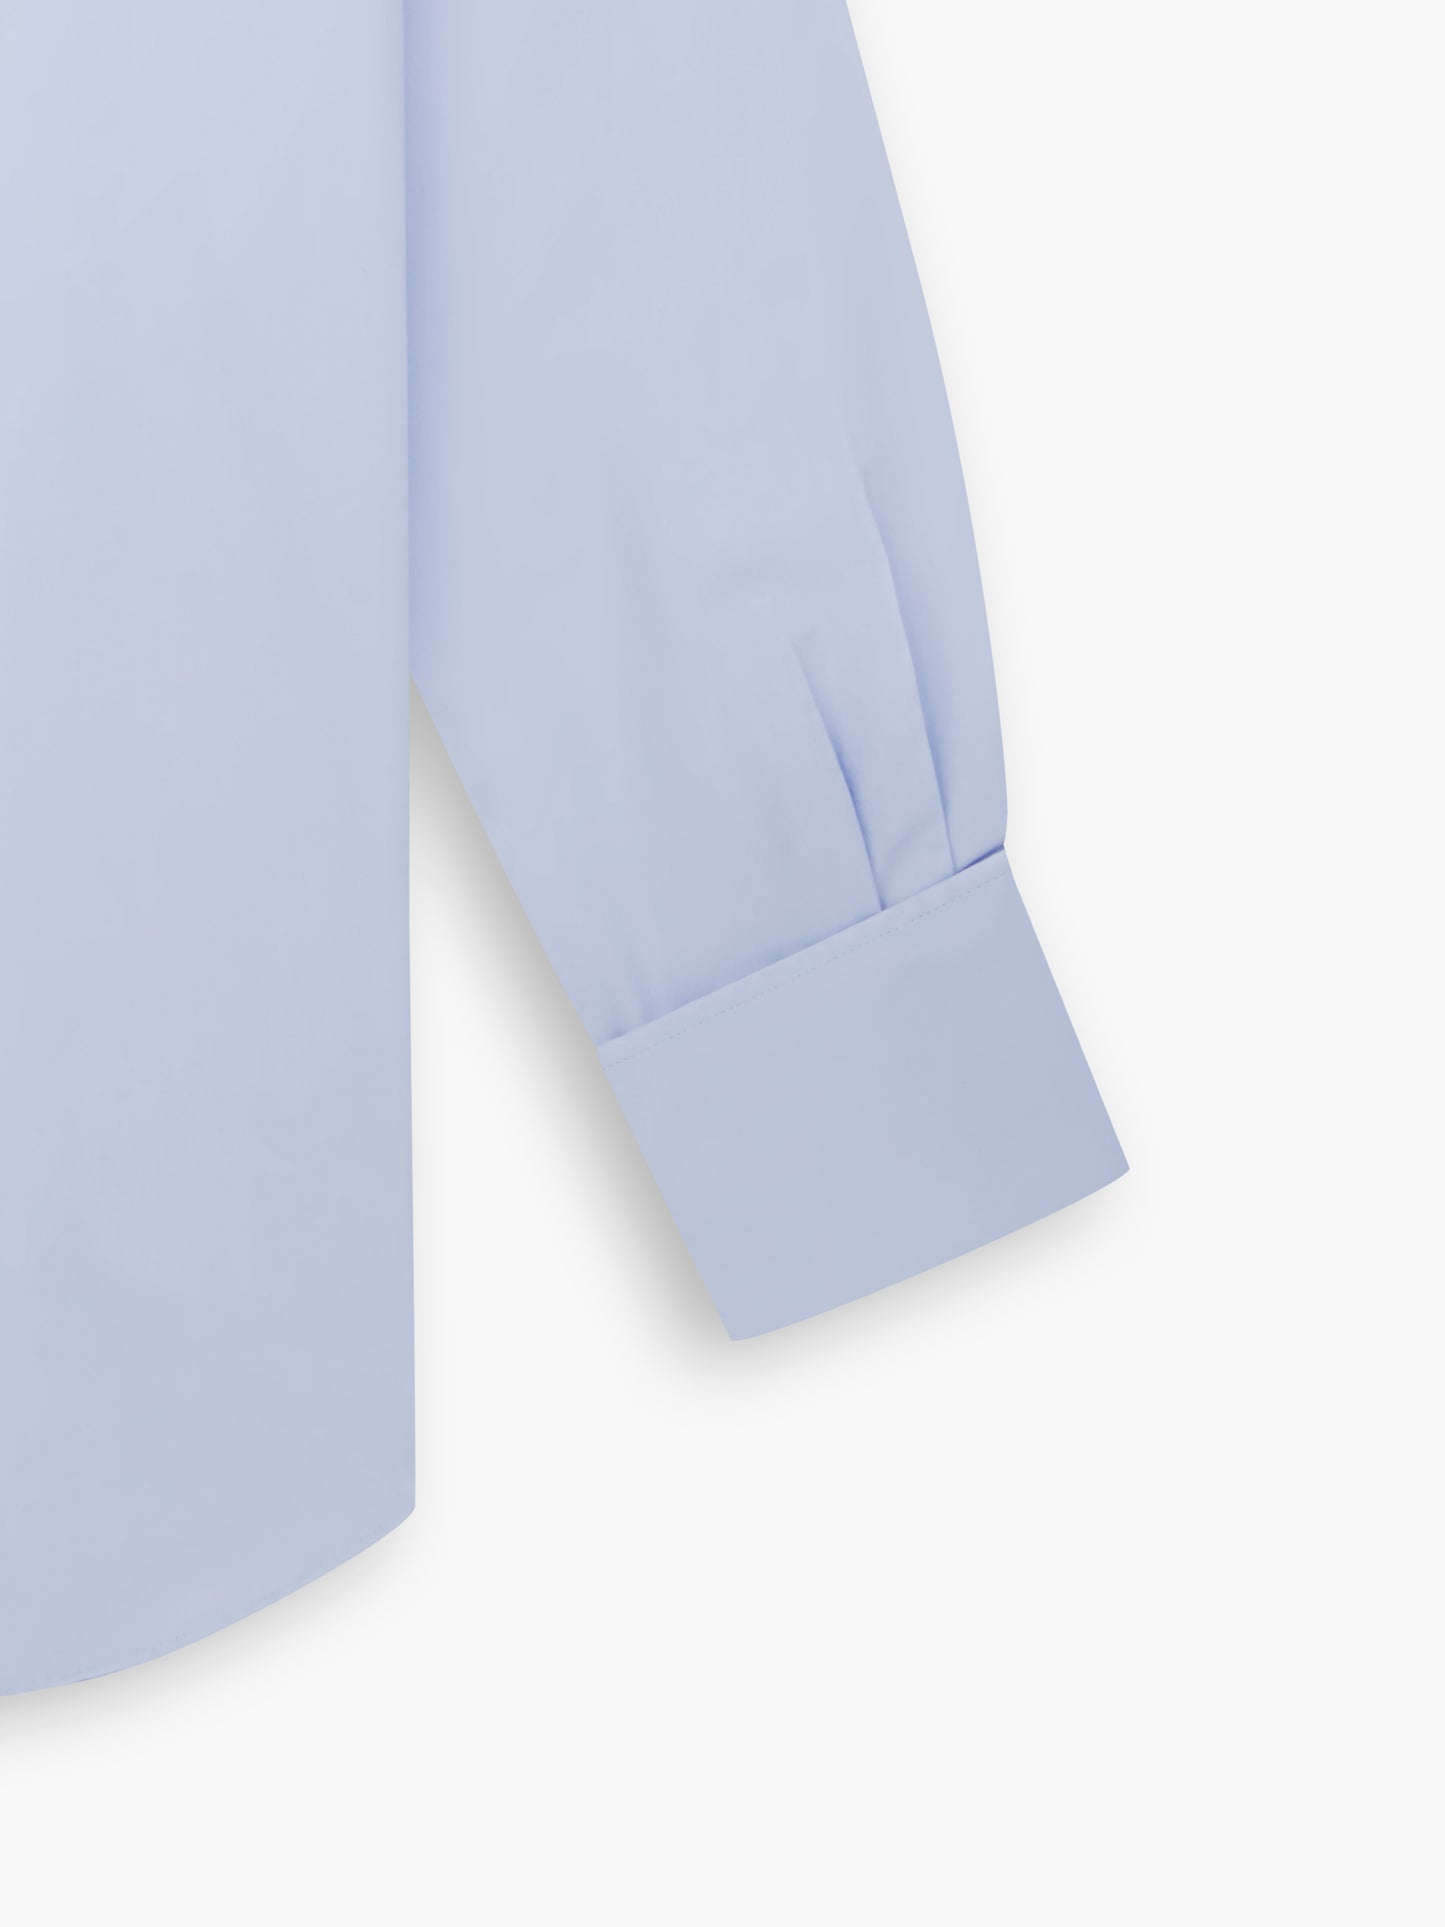 Non-Iron Blue Poplin Slim Fit Double Cuff Classic Collar Shirt